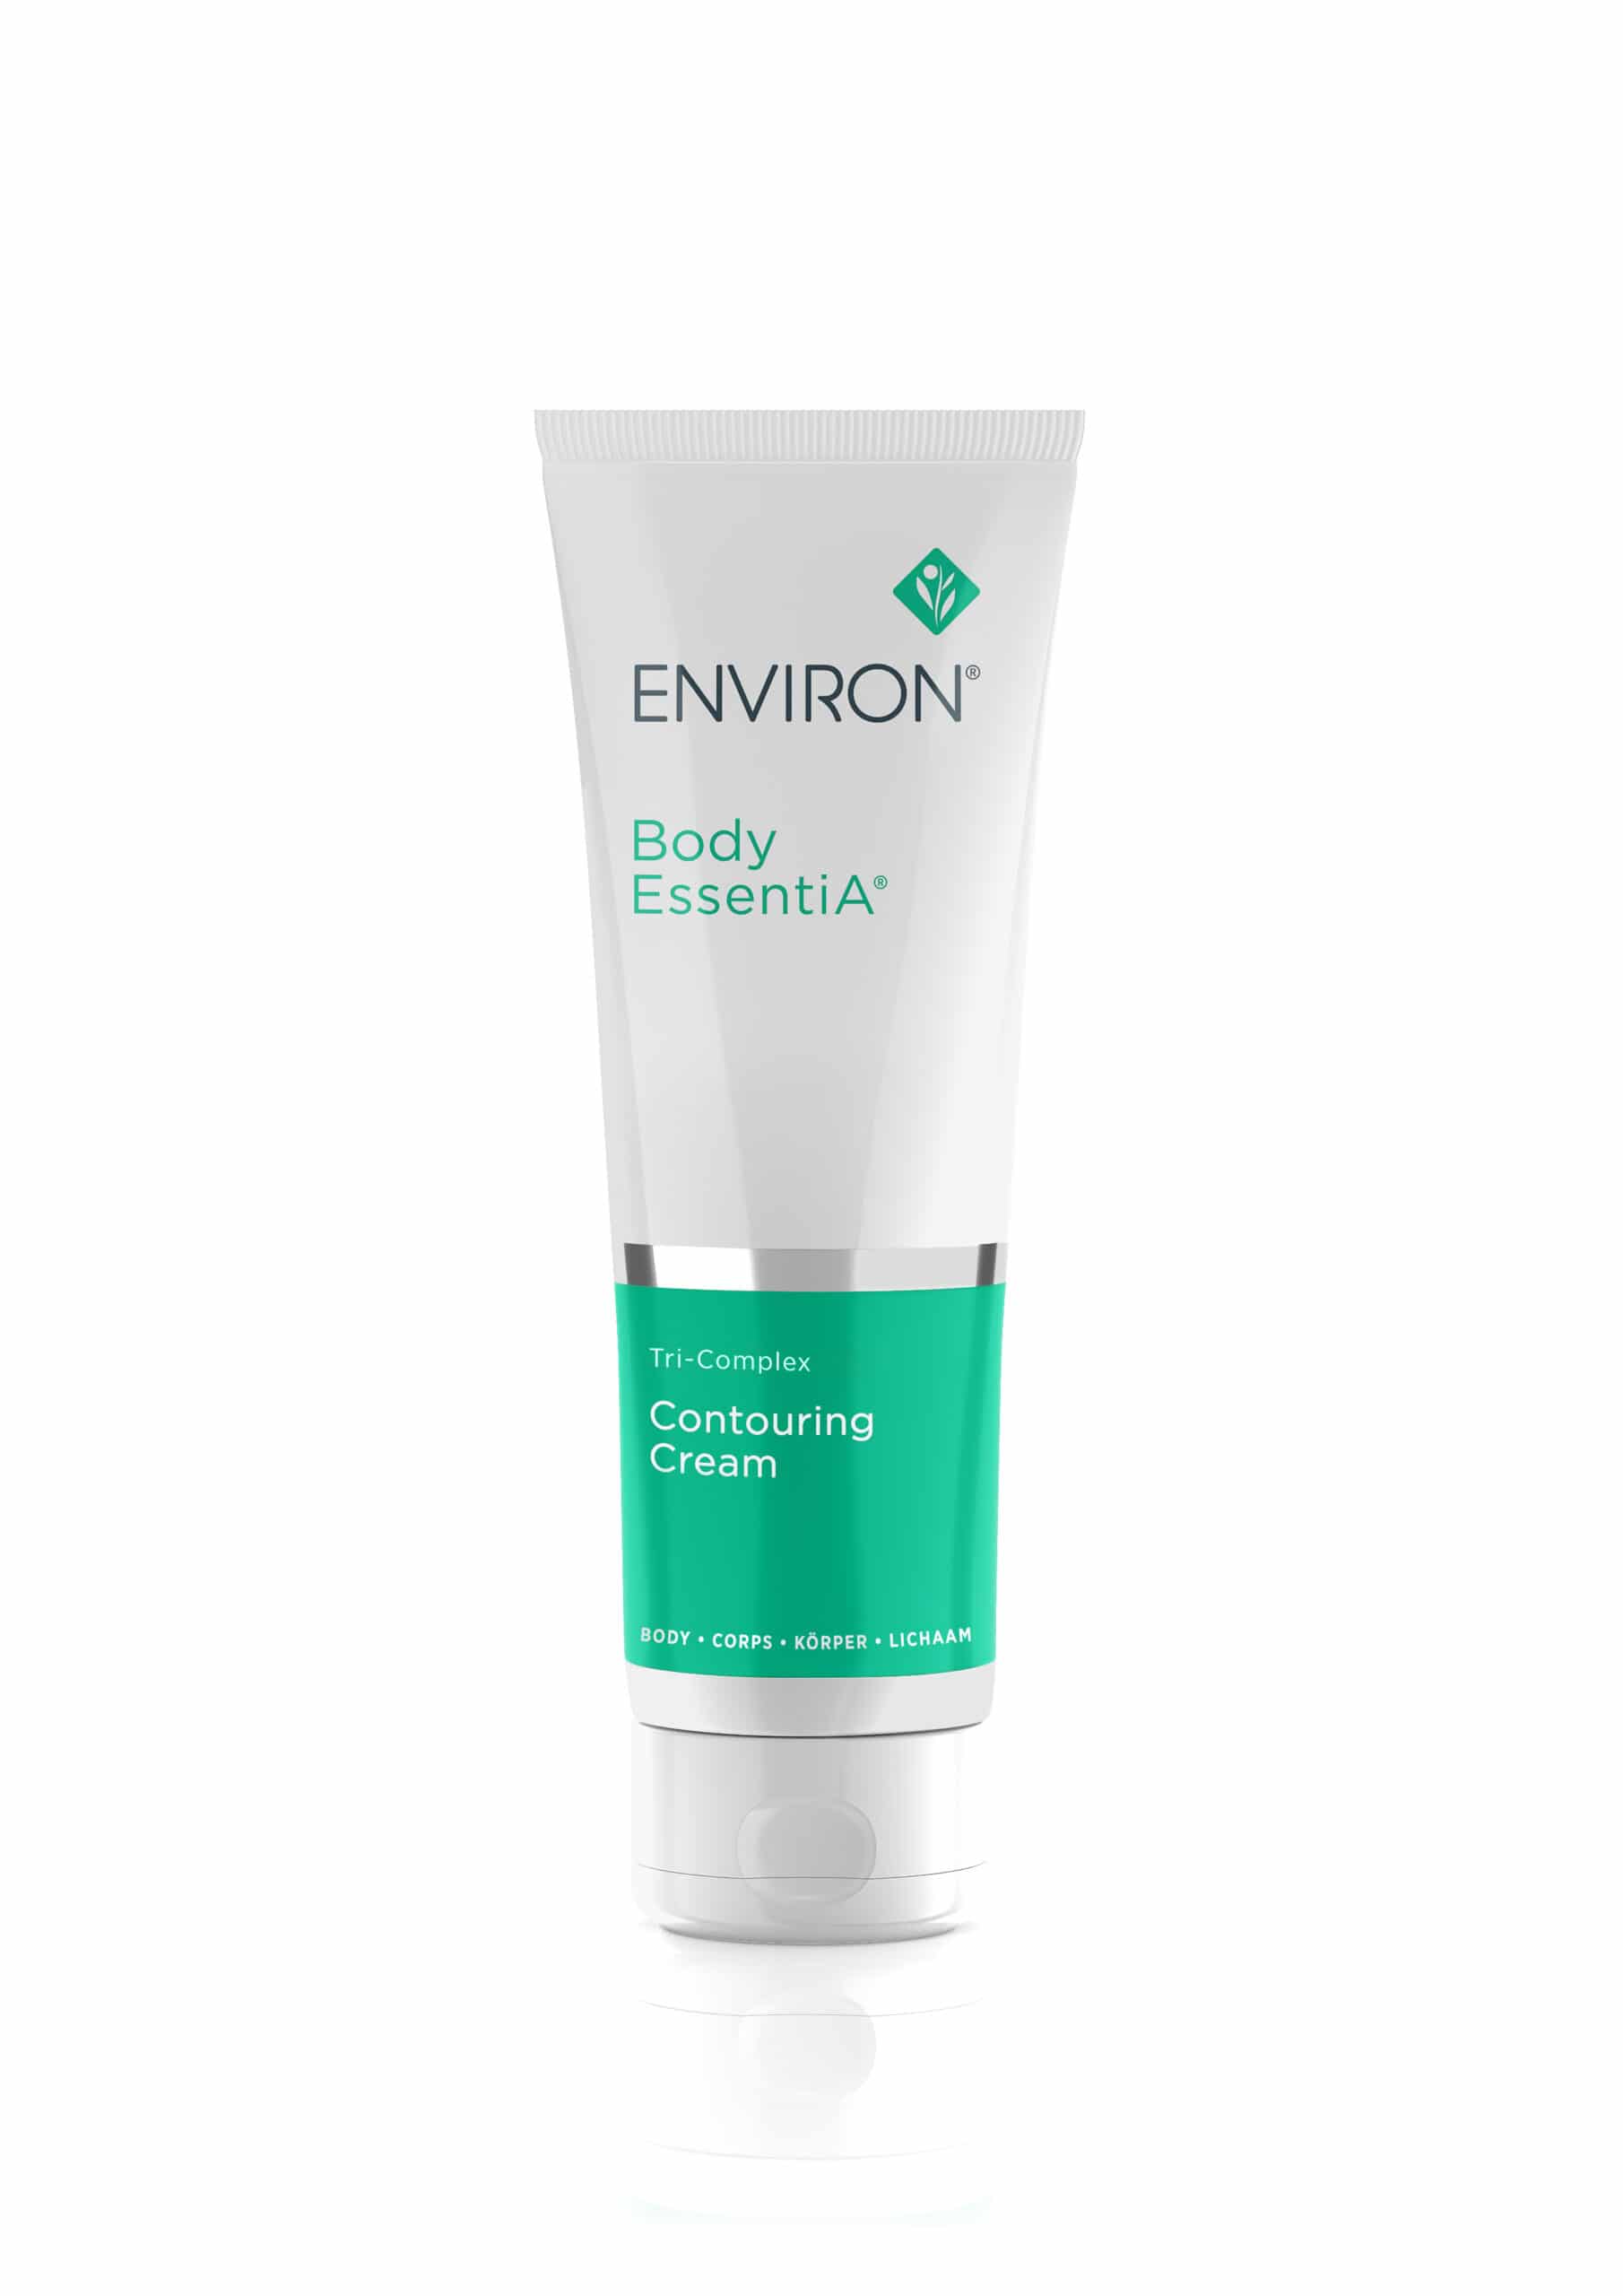 Environ Body EssentiA Tri-Complex Contouring Cream | Bella Reina Spa | Authorized Stockist (2)